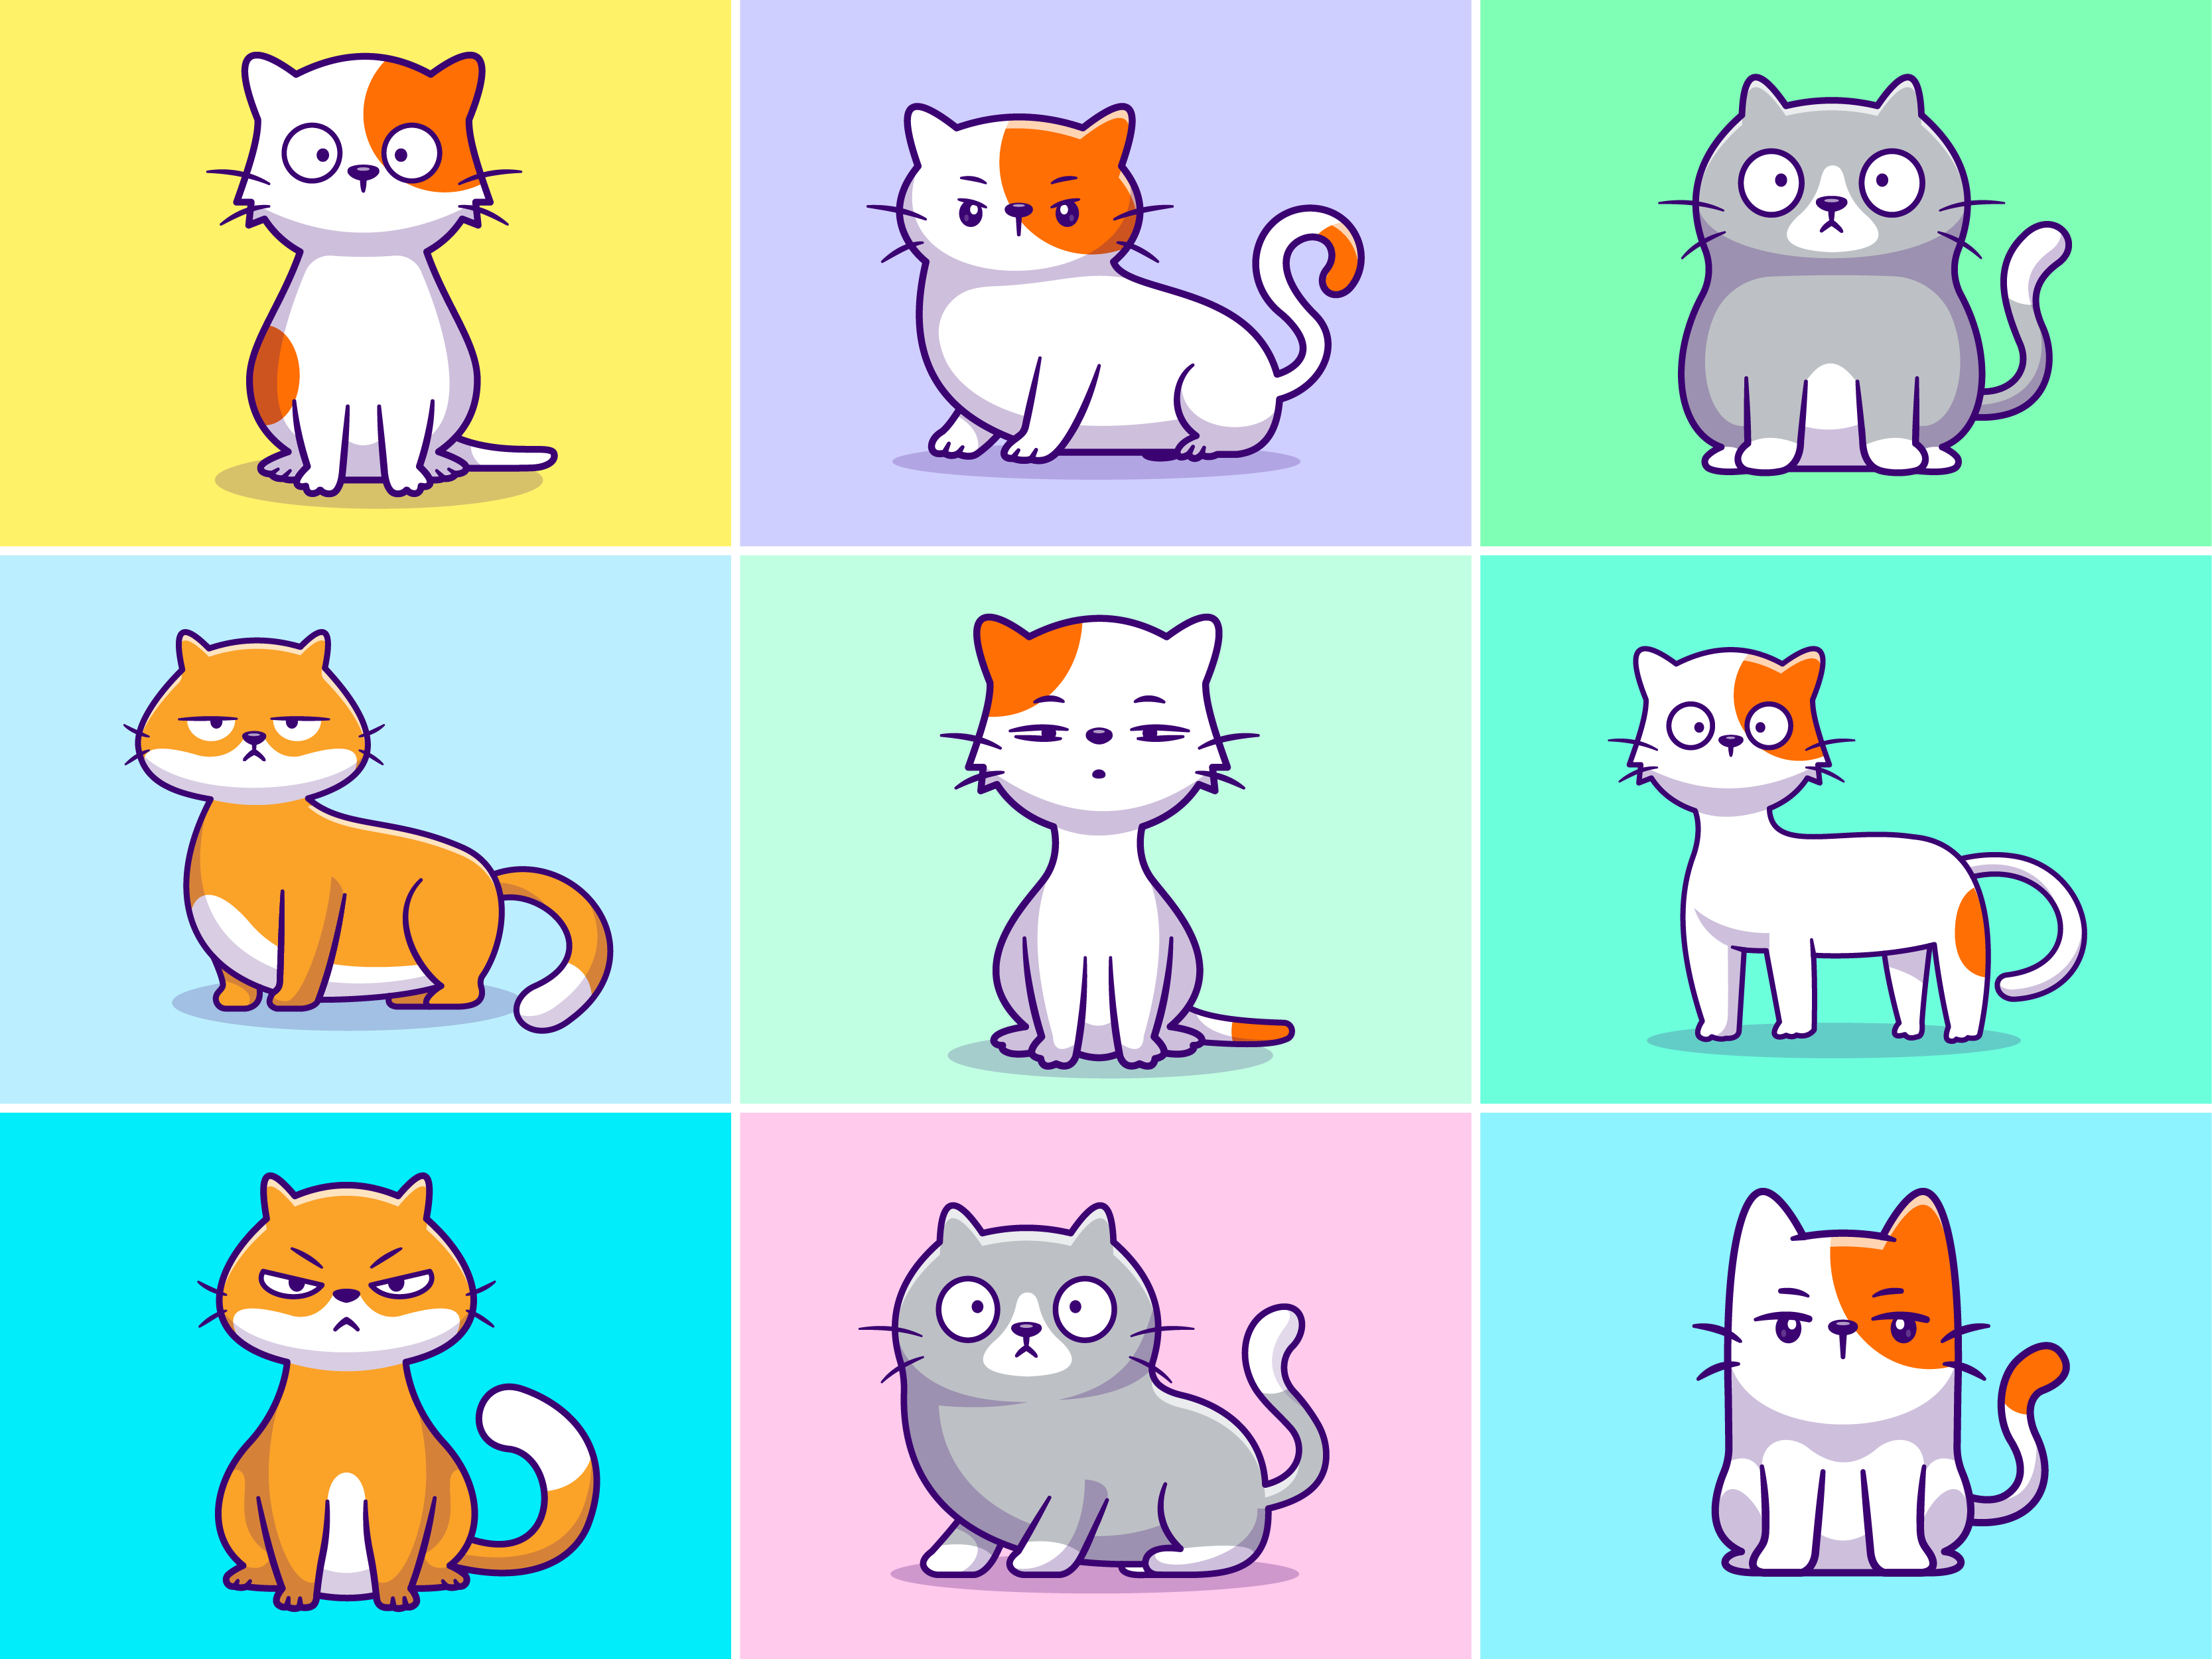 BAD CAT on Behance  Bad cats, Cats, Design inspiration